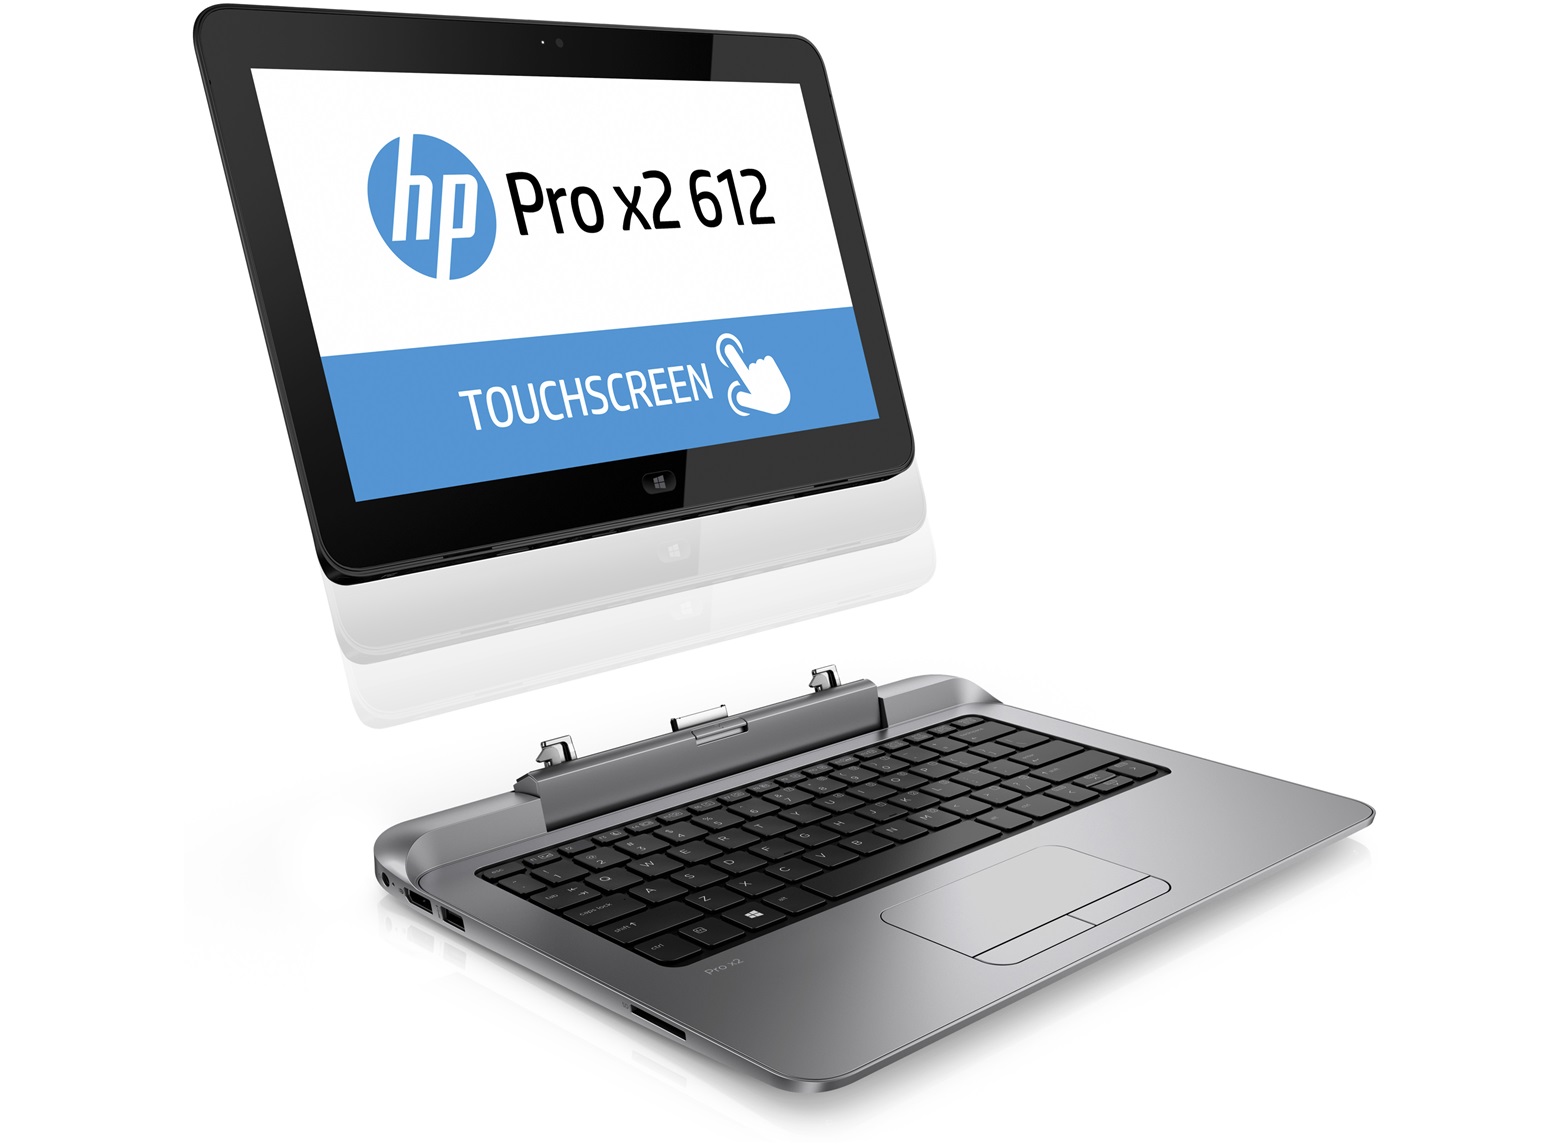 HP Pro x2